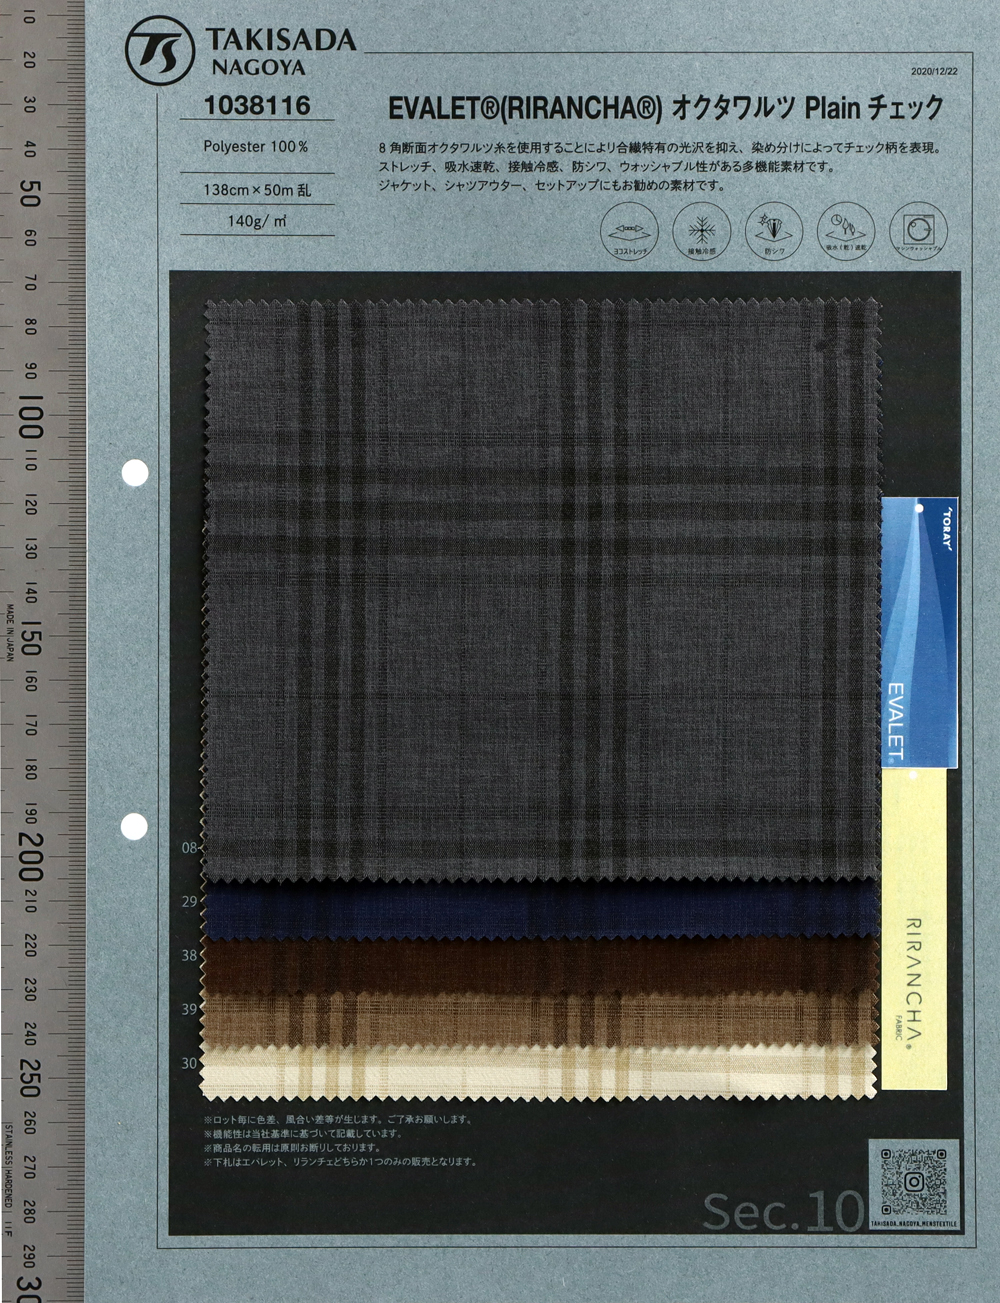 1038116 EVALET® RIRANCHE ARAN CHECK Stretch[Textile / Fabric] Takisada Nagoya